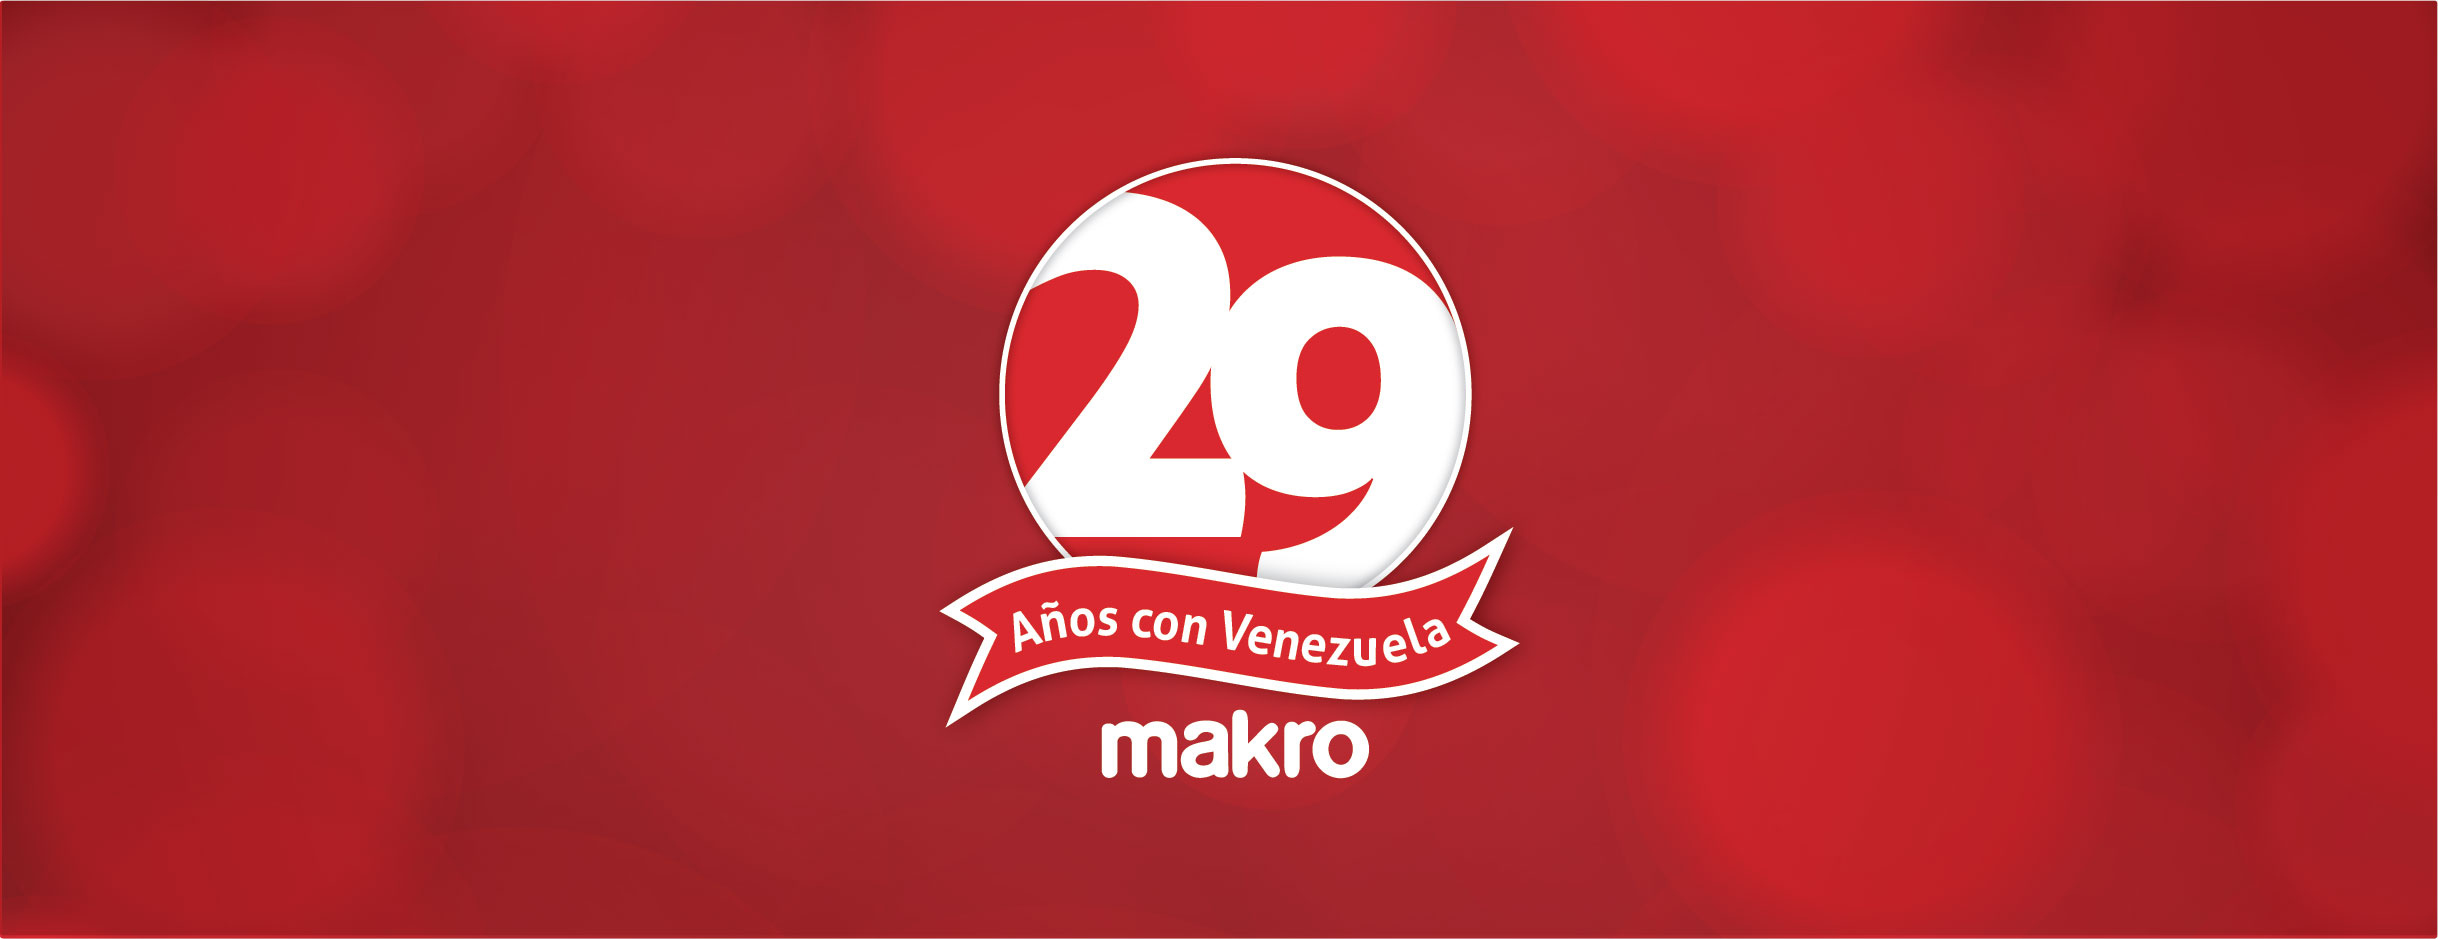 Makro Venezuela